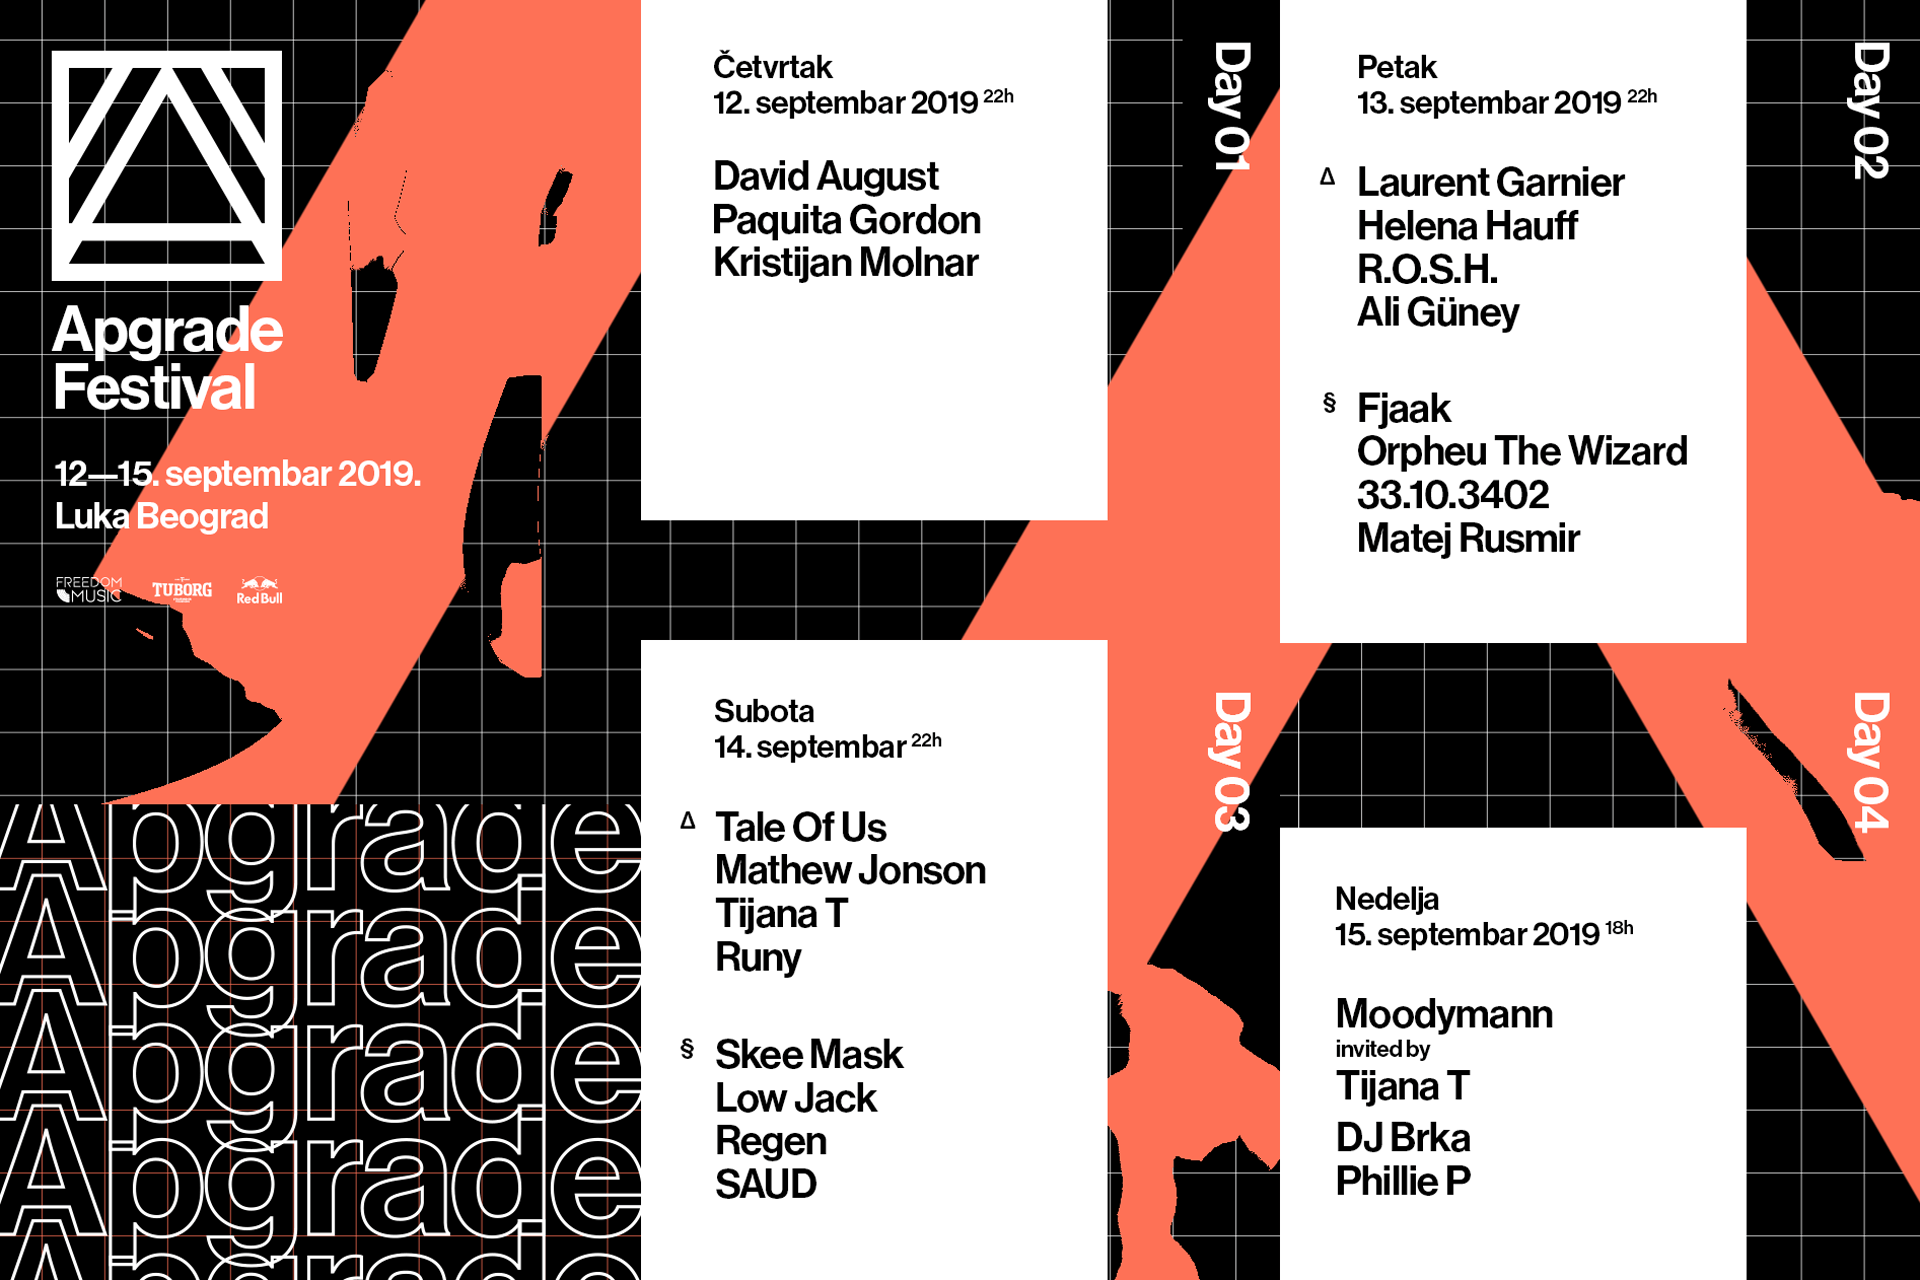 Apgrade Festival 2019 (apgrade.org)